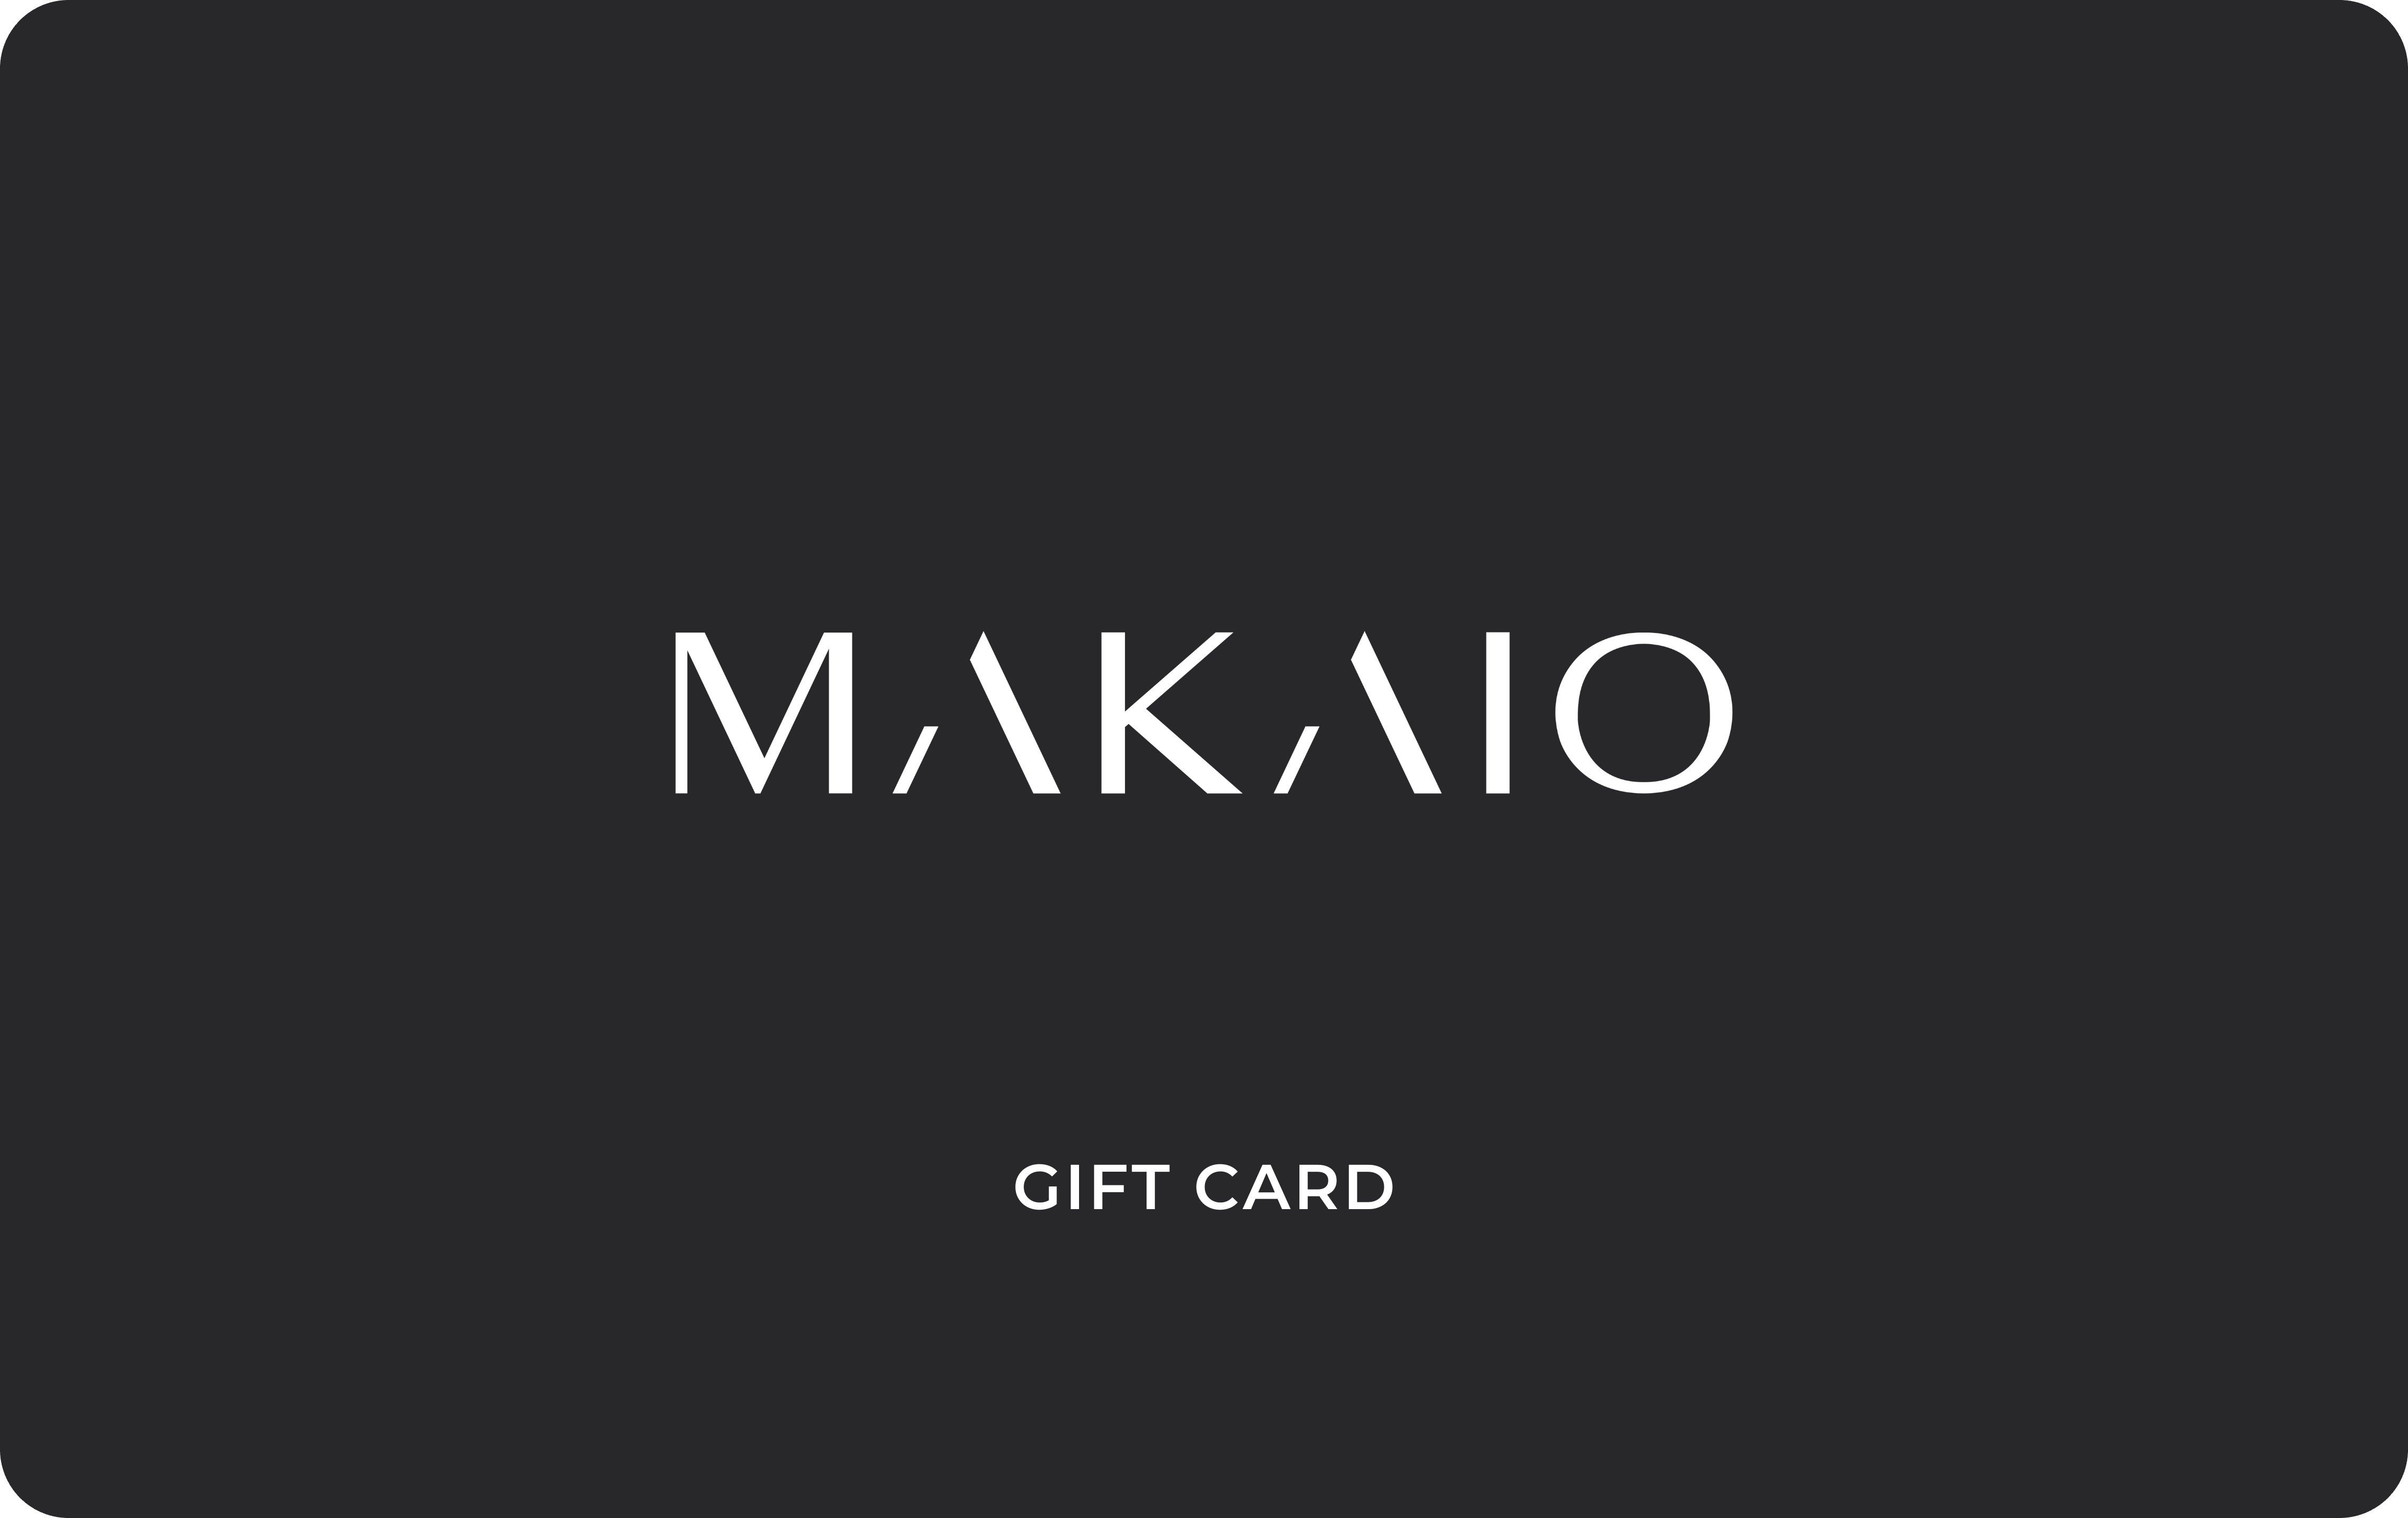 Gift Card - MAKAIO